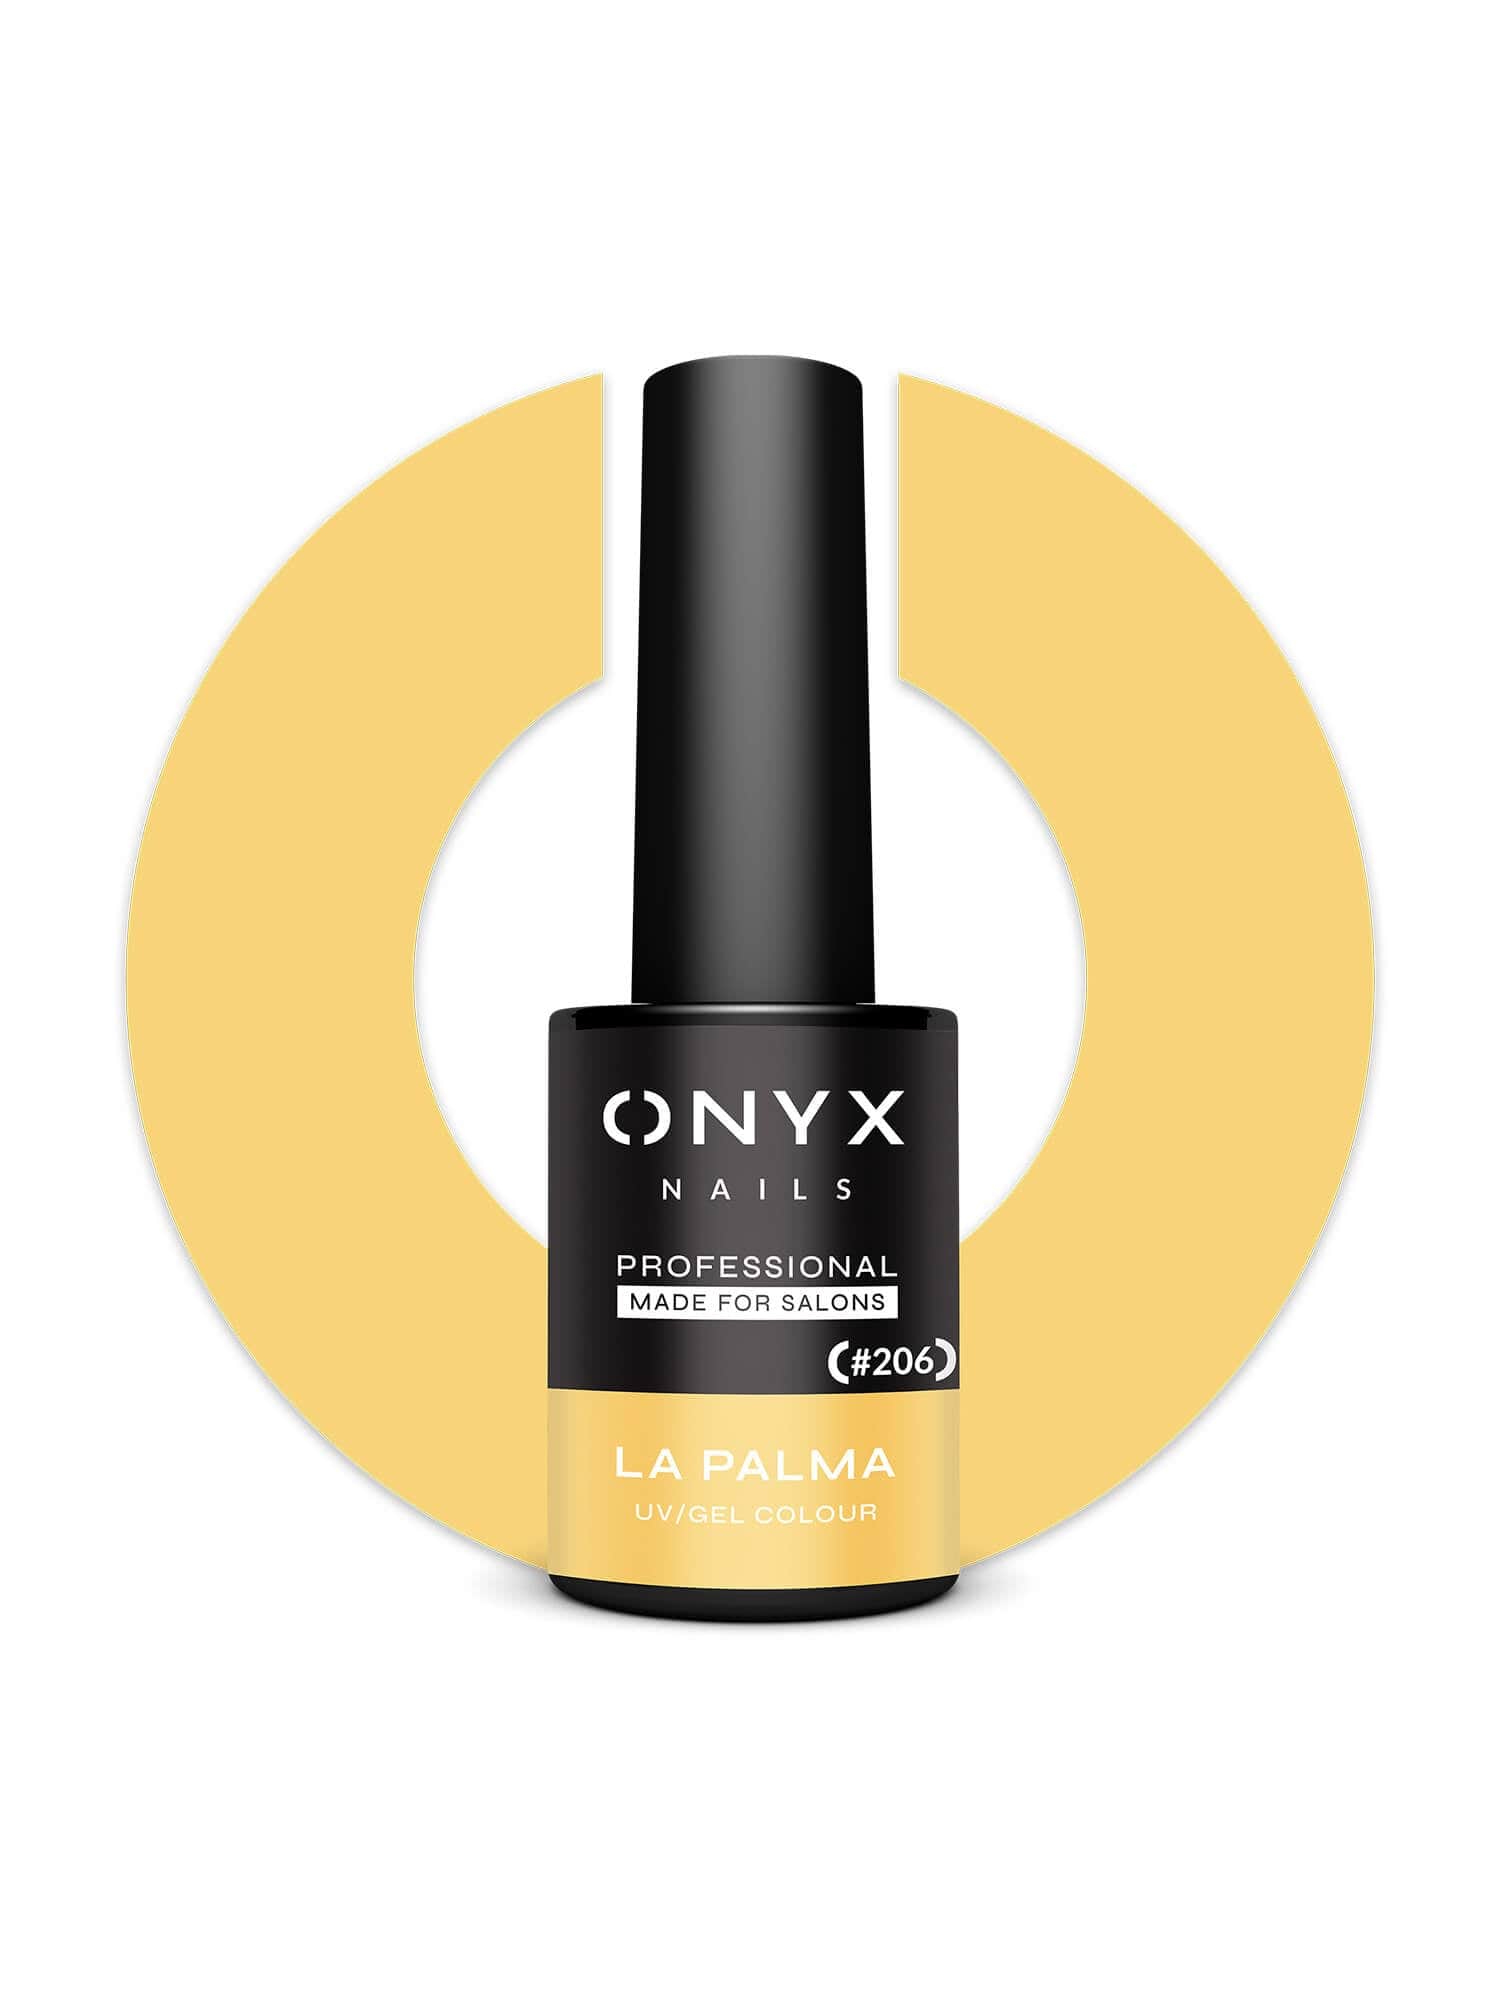 Onyx Nails Ημιμόνιμο βερνίκι 206 La Palma